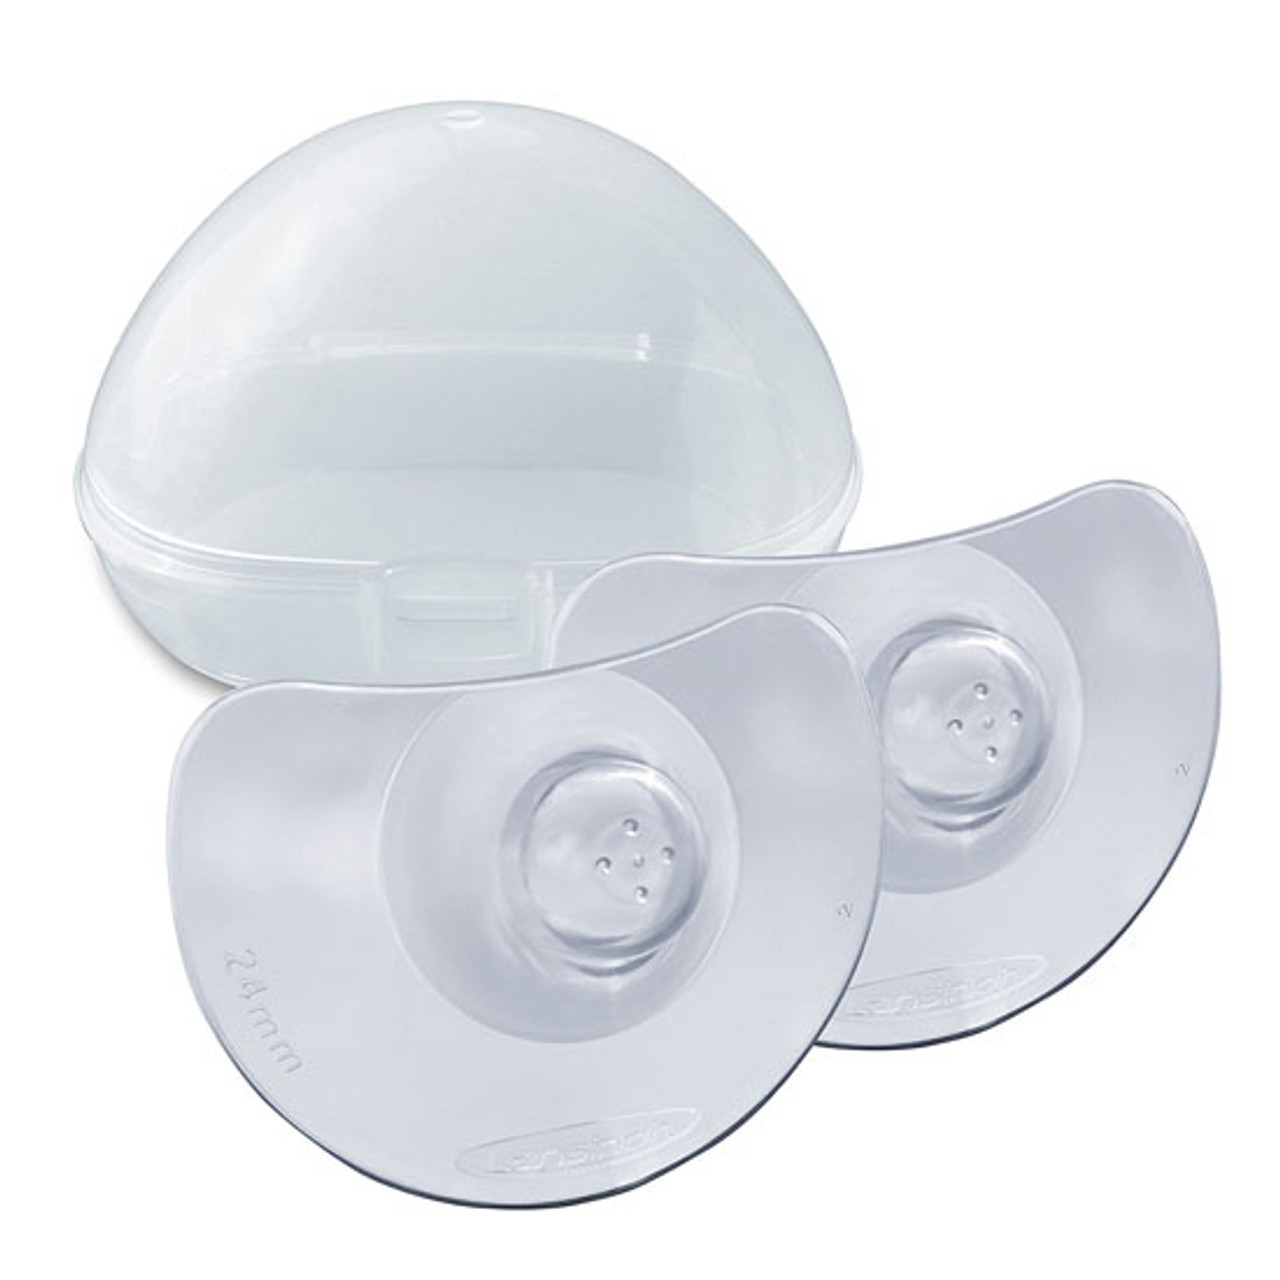 Lansinoh - 2Pk Nipple Shield for Breastfeeding 24 MM